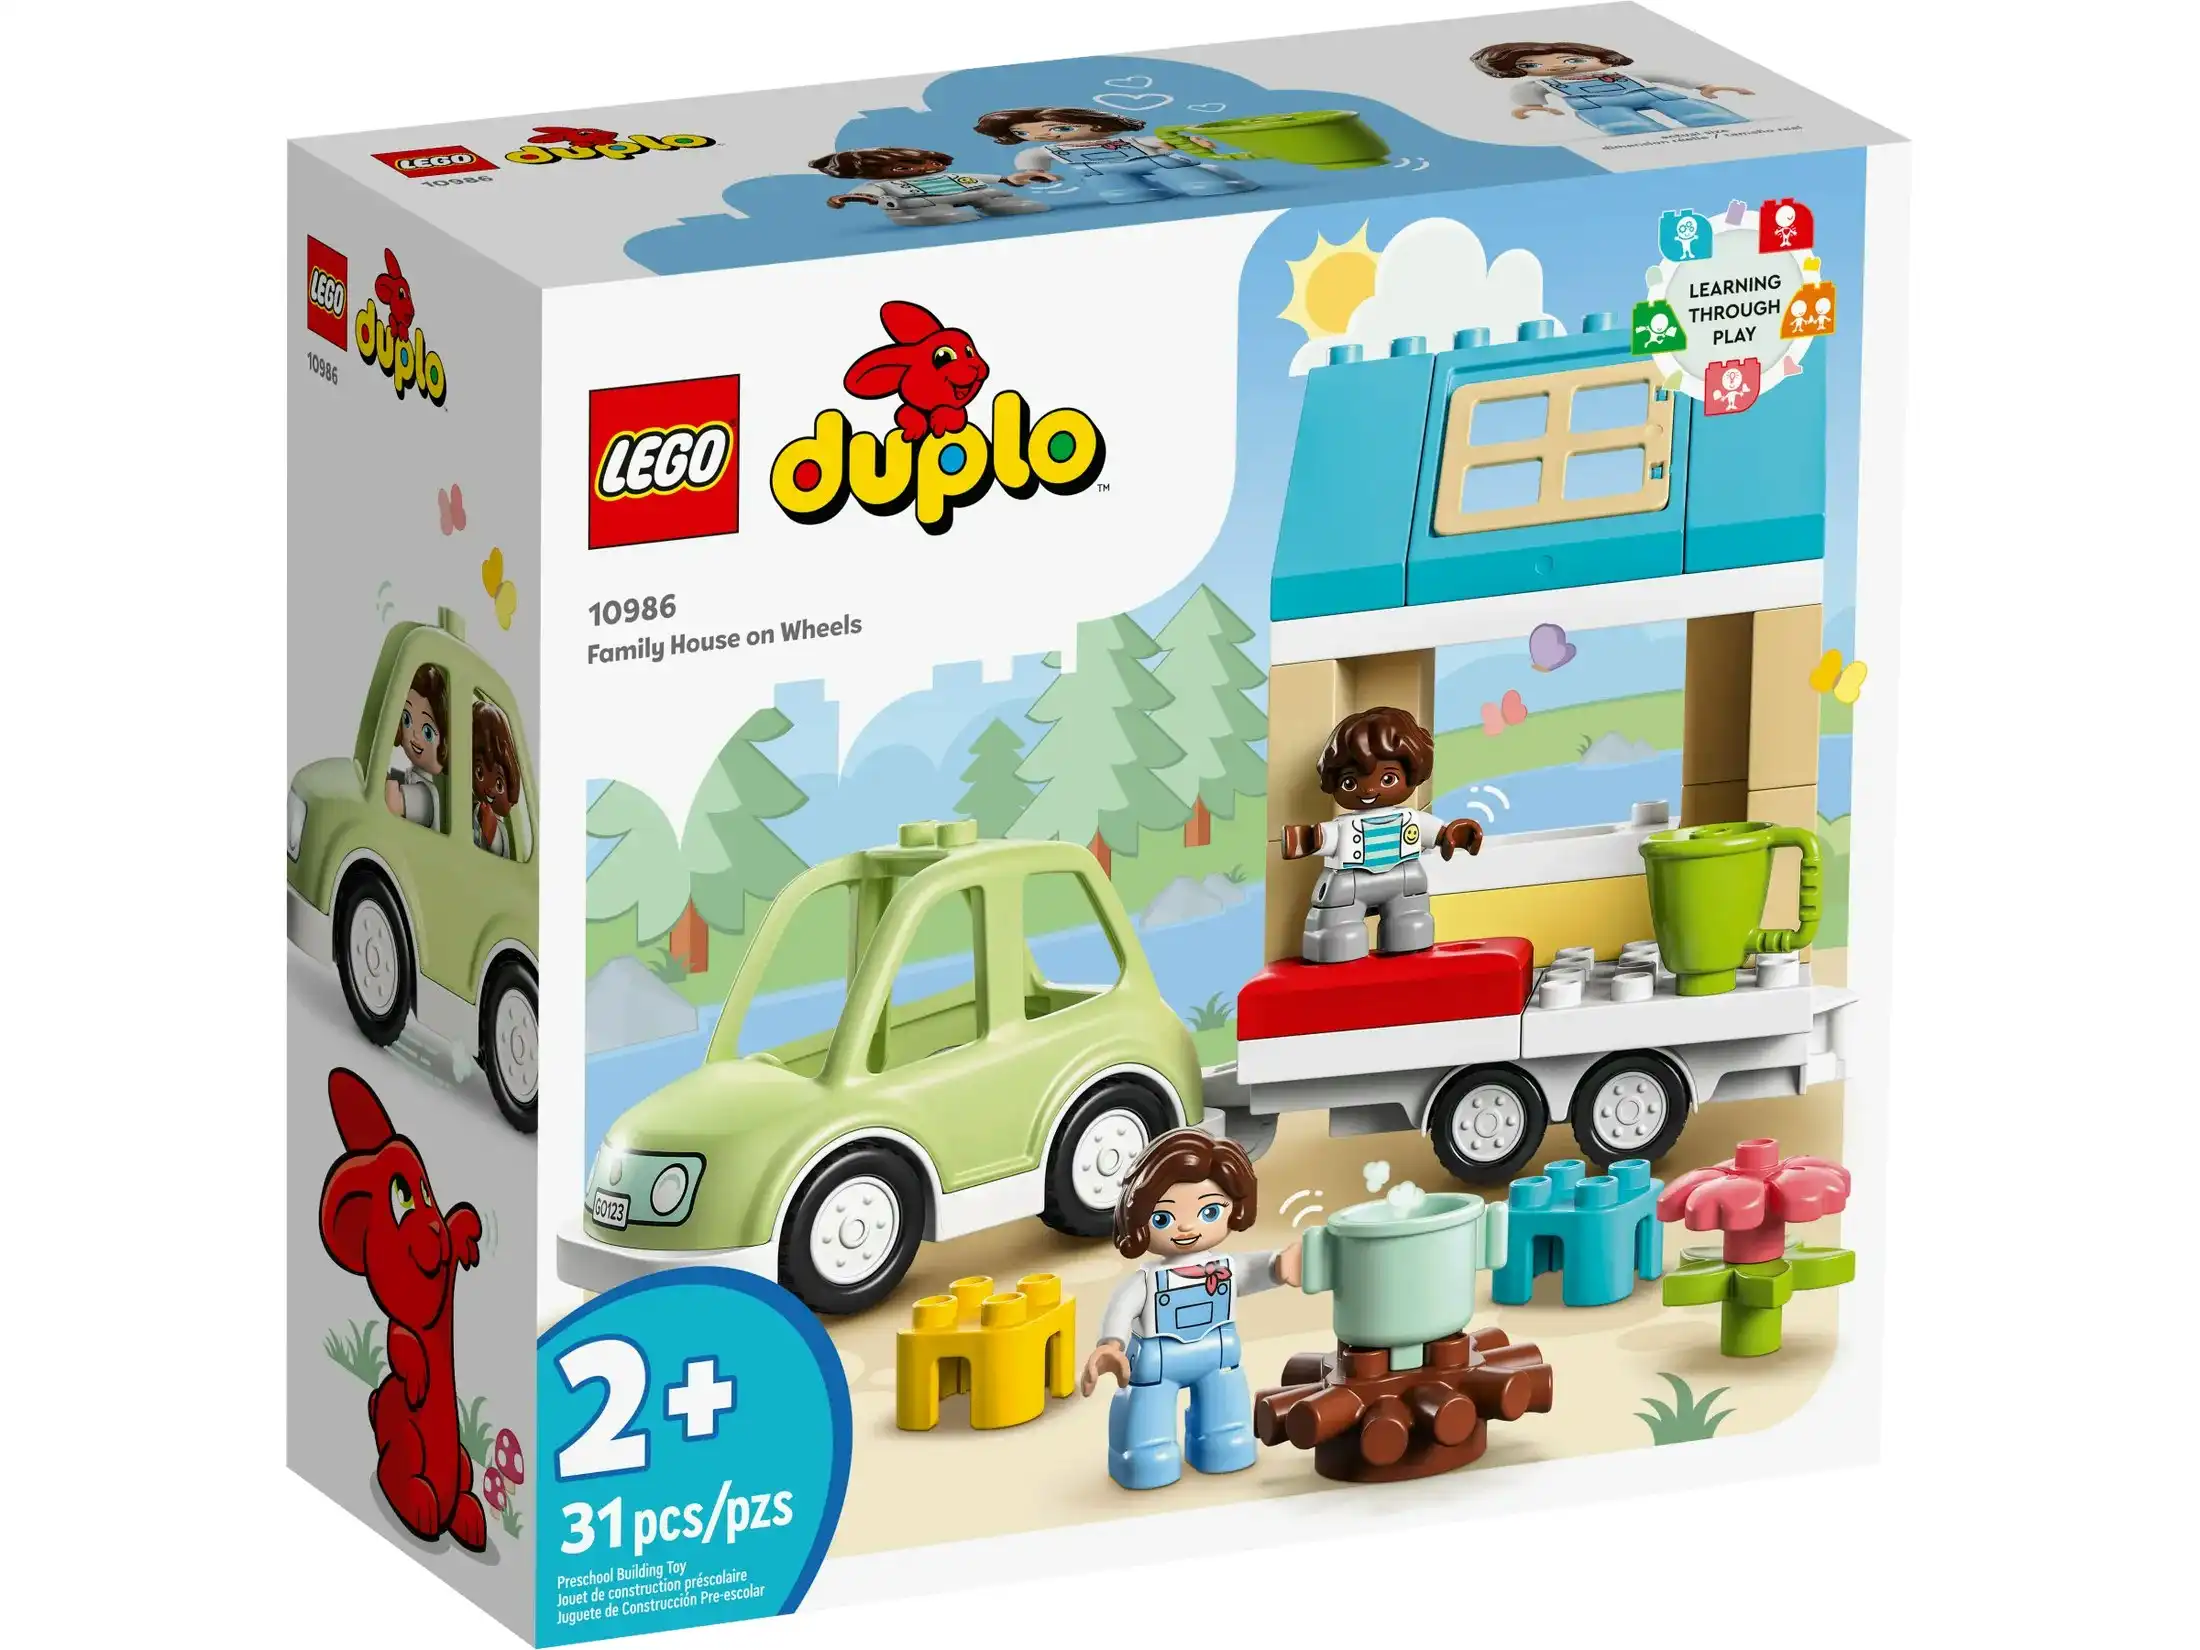 LEGO 10986 Family House on Wheels - Duplo